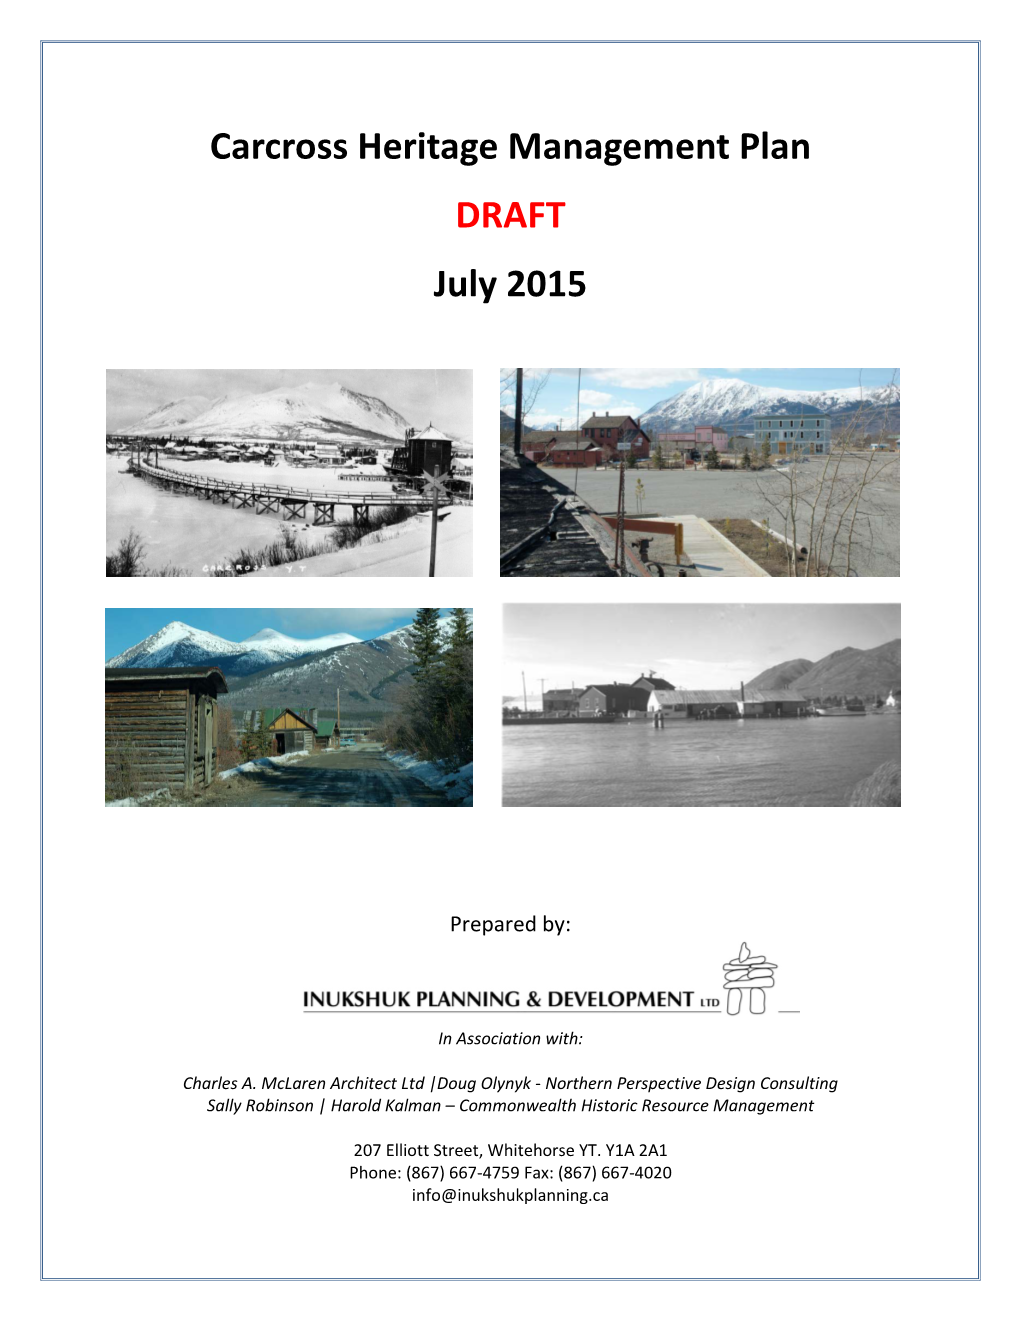 Carcross Heritage Management Plan DRAFT July 2015